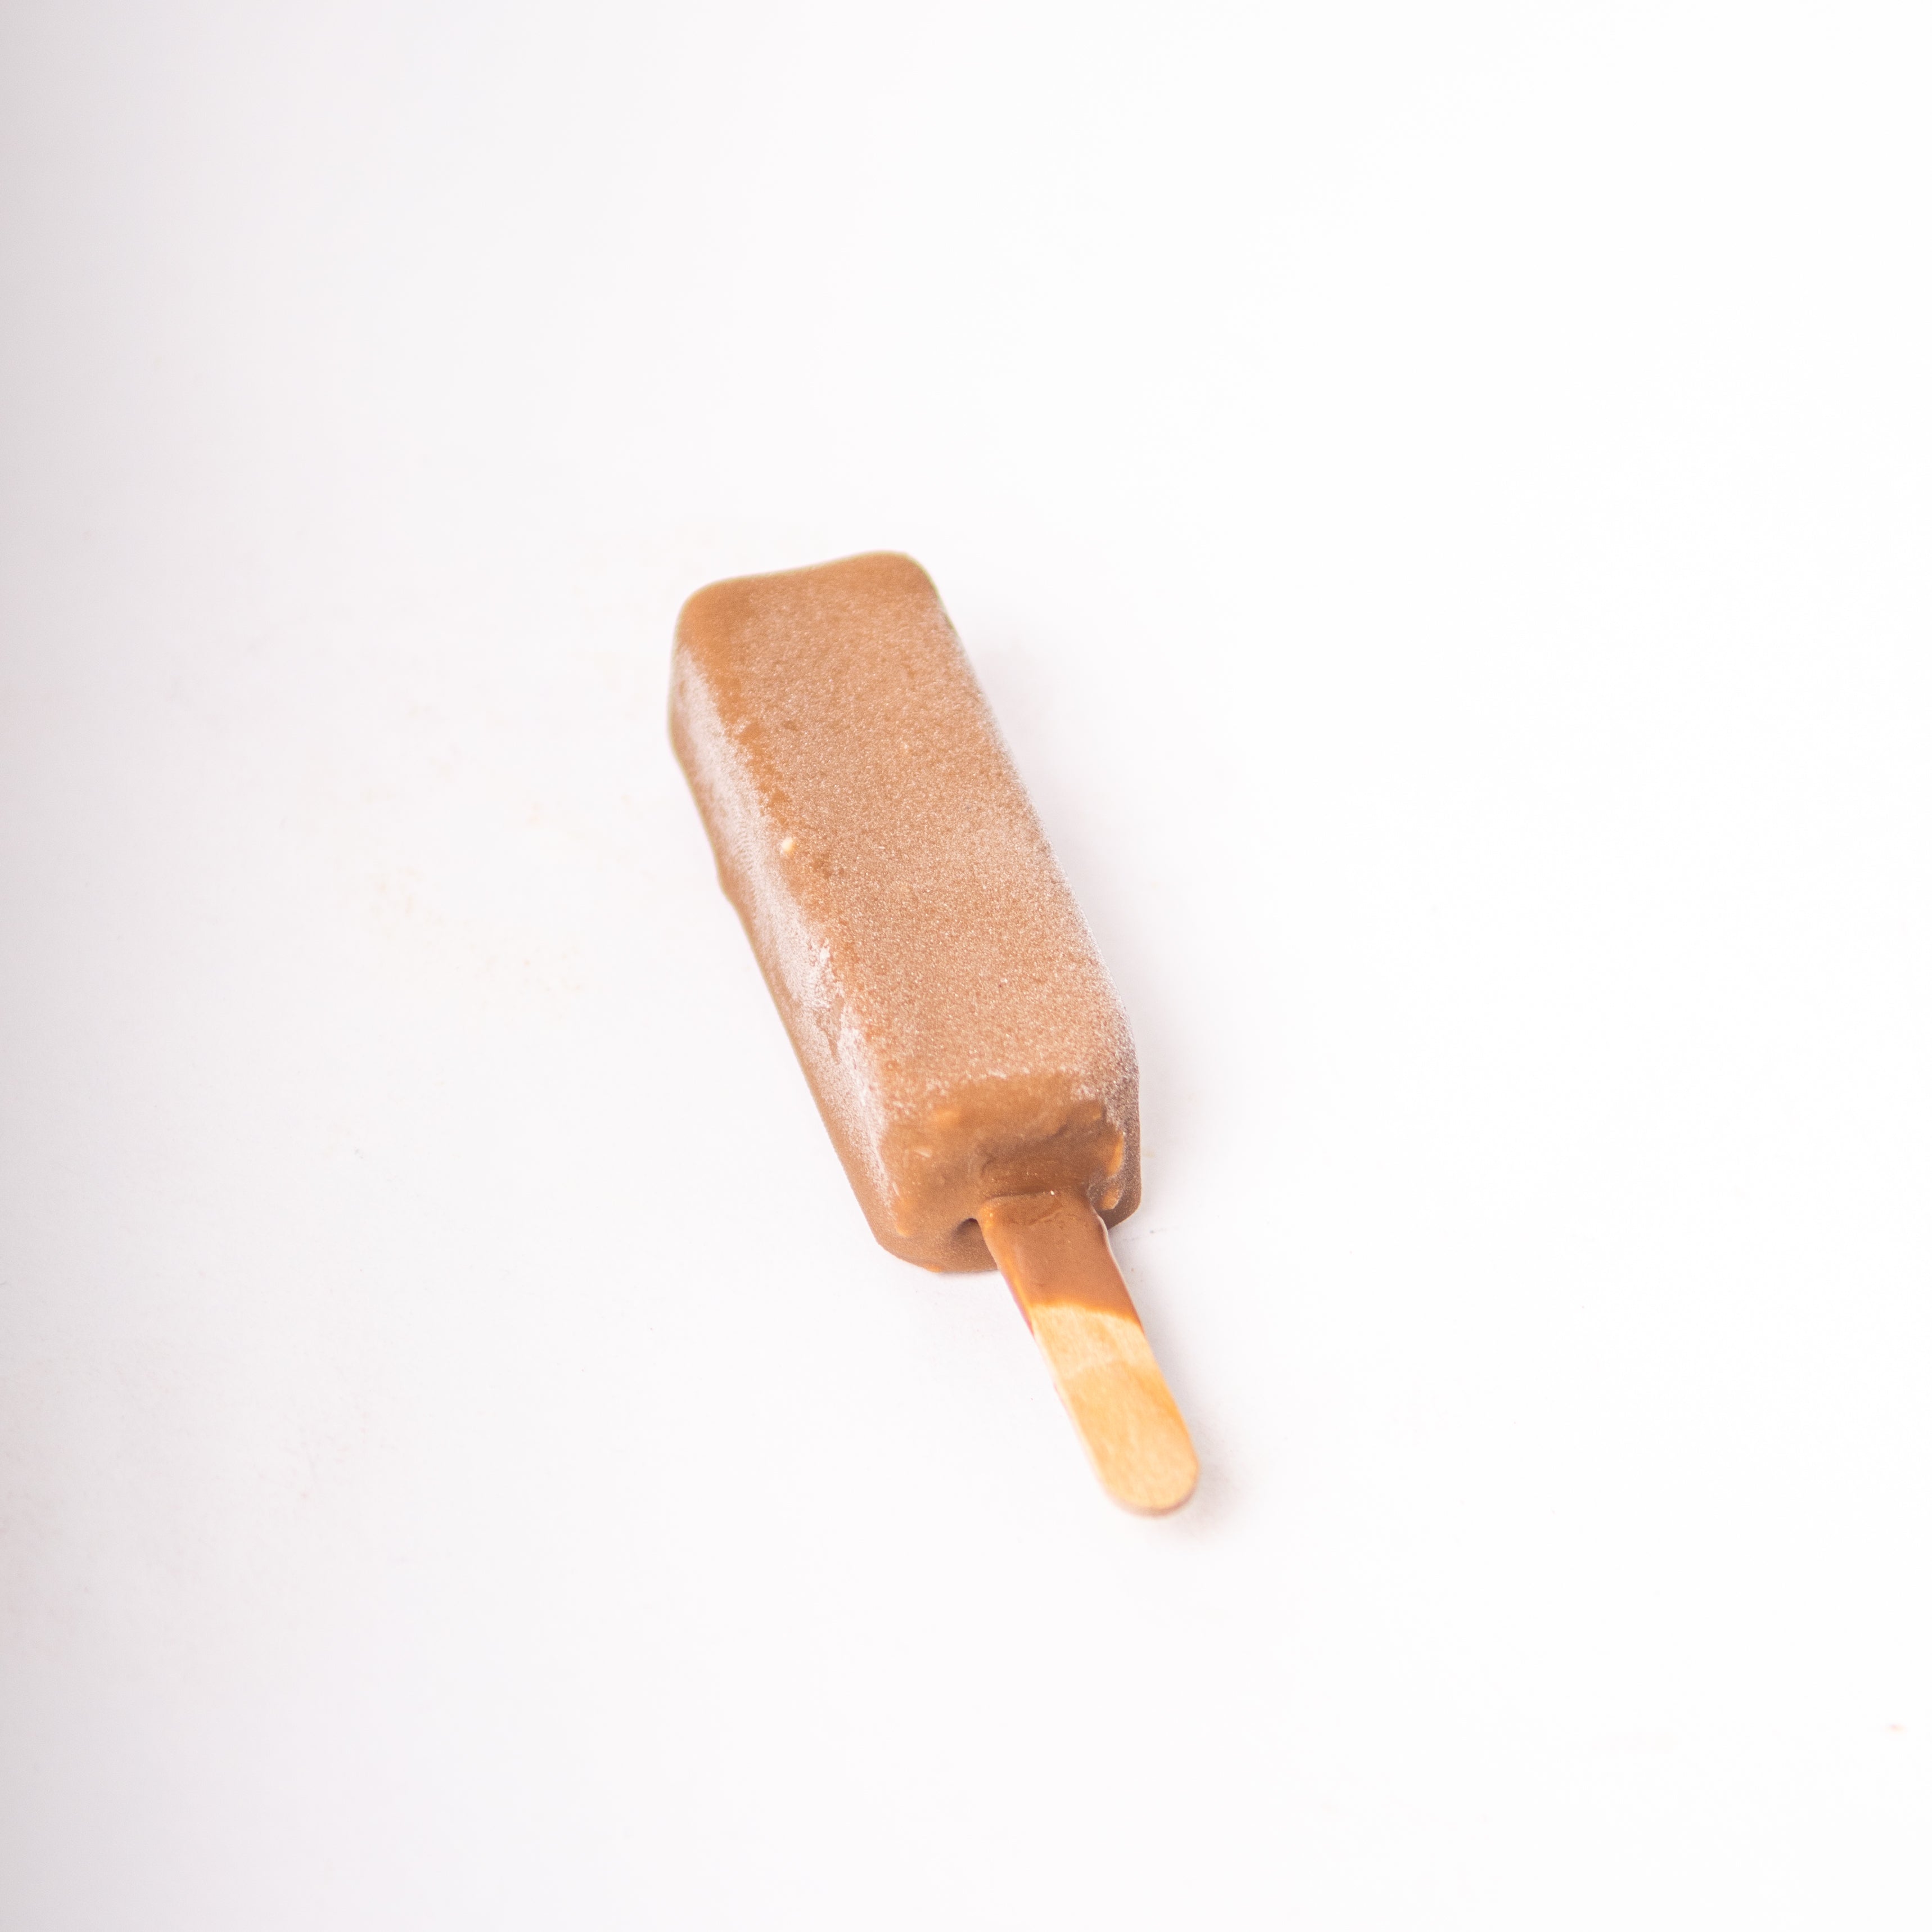 Mini Frisco vanille omhuld met melk chocolade - 80st